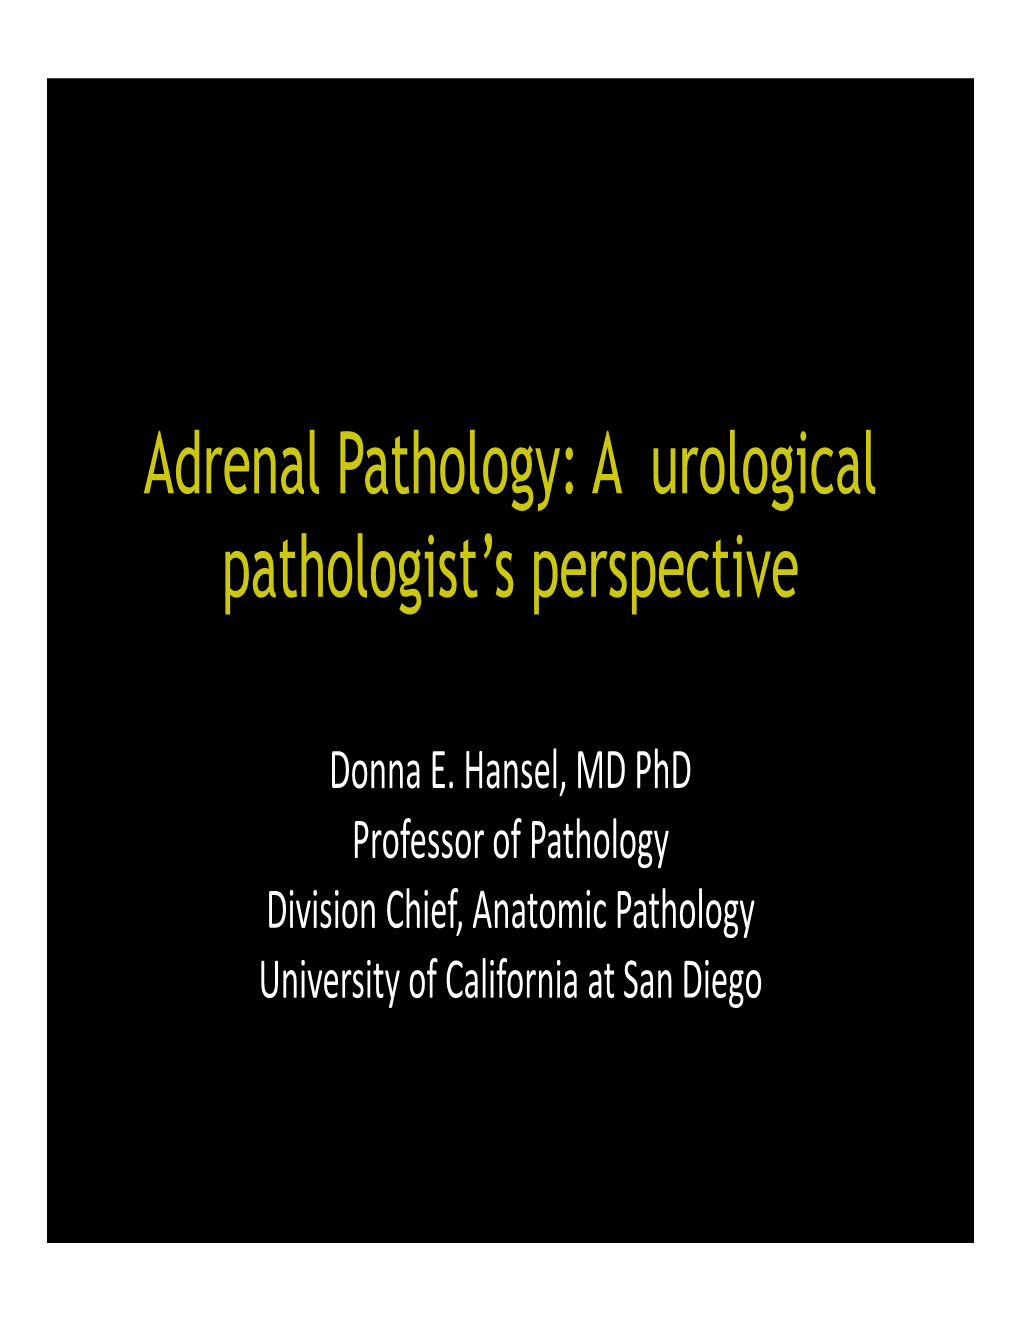 Adrenal Pathology: a Urological Pathologist's Perspective